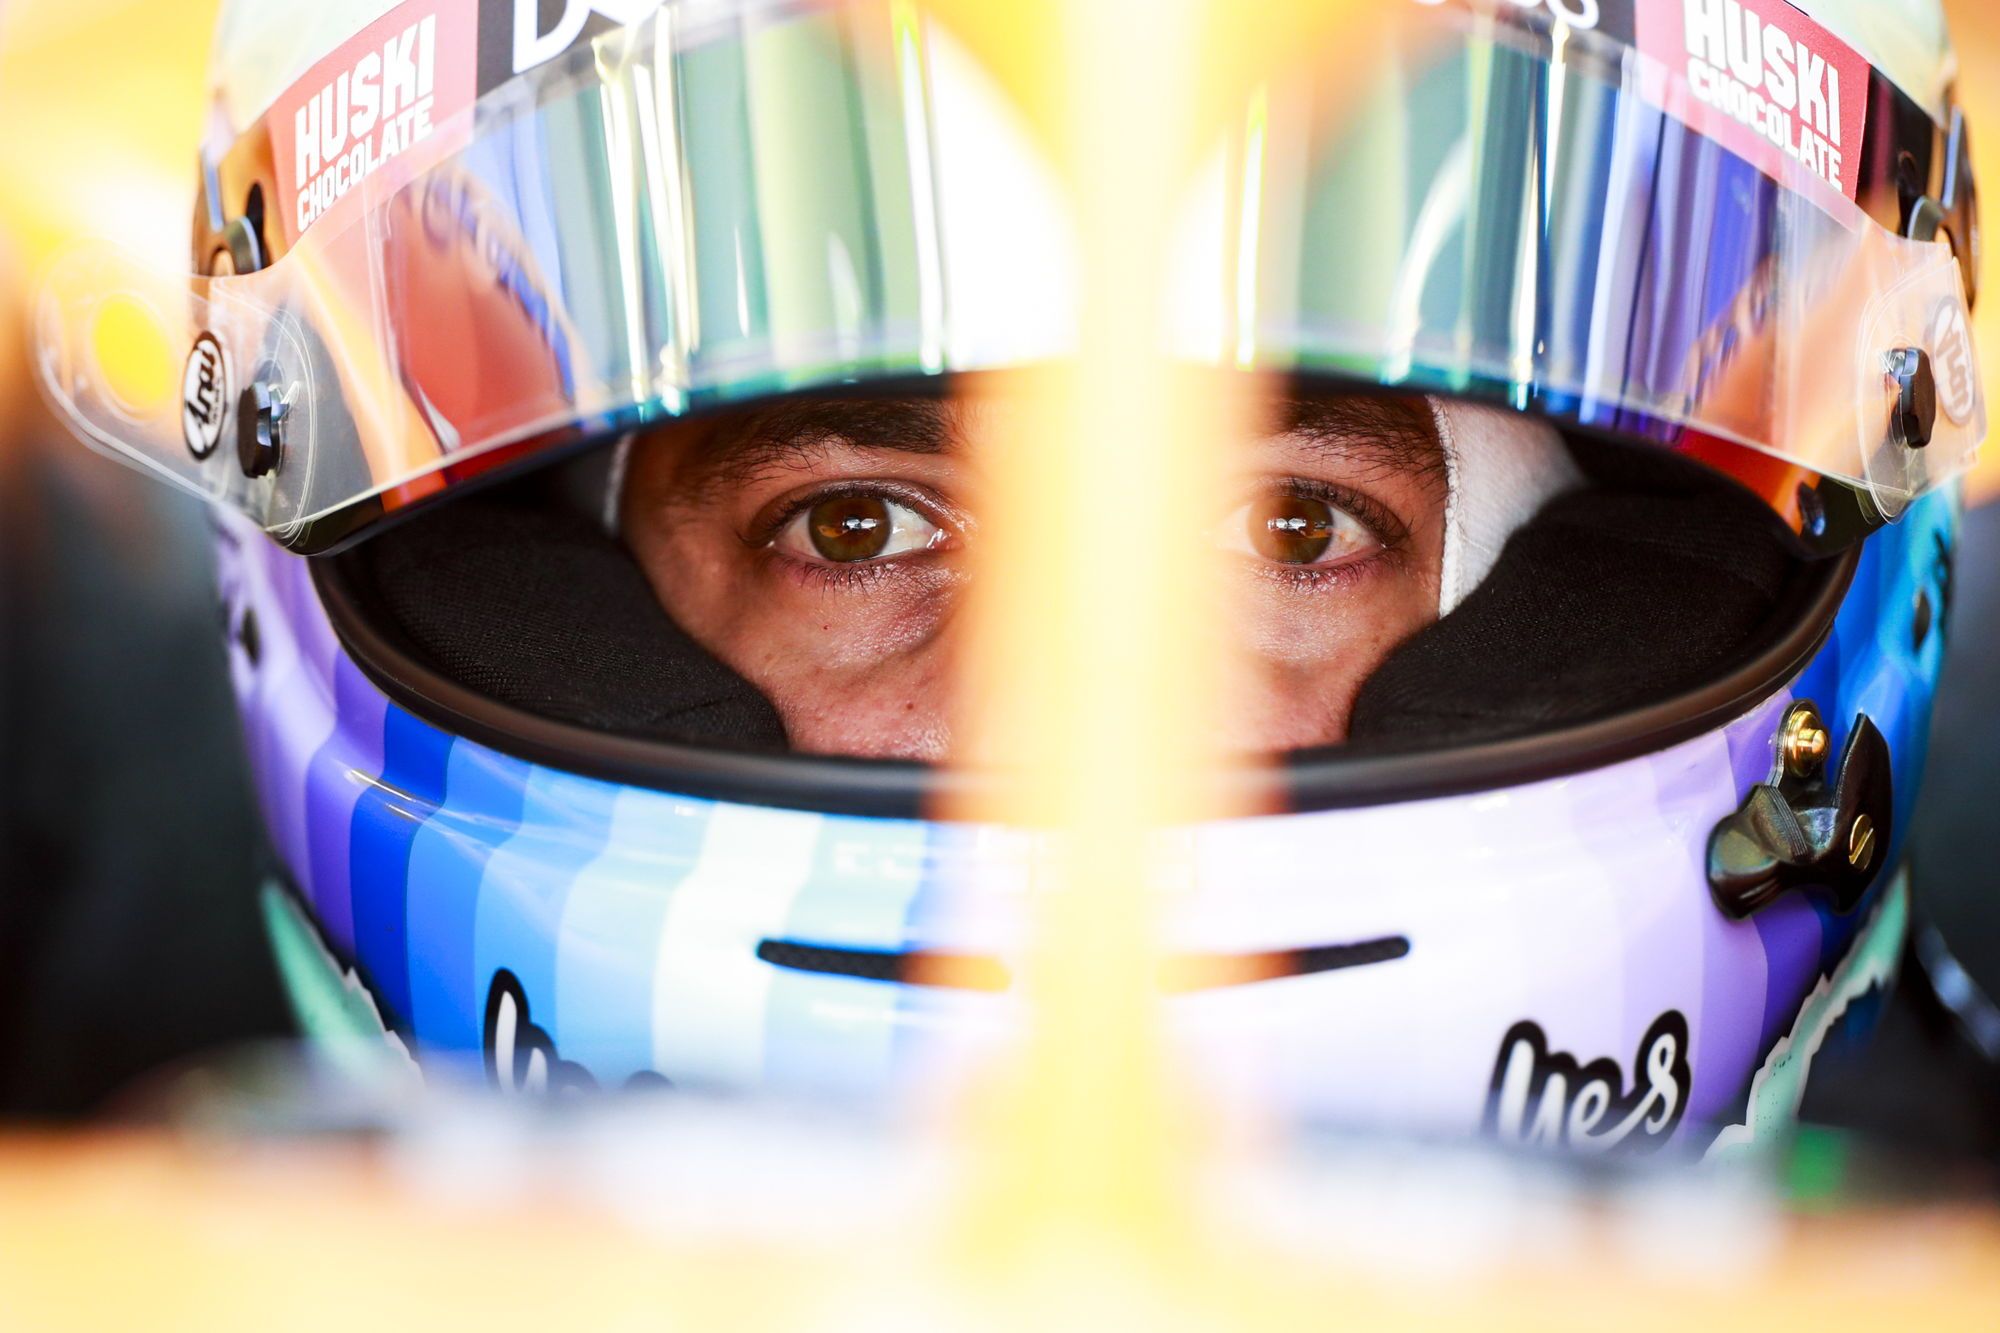 F1 - Ricciardo regrette l'attitude "idiote" de la F1 qui diffuse des images de crashs